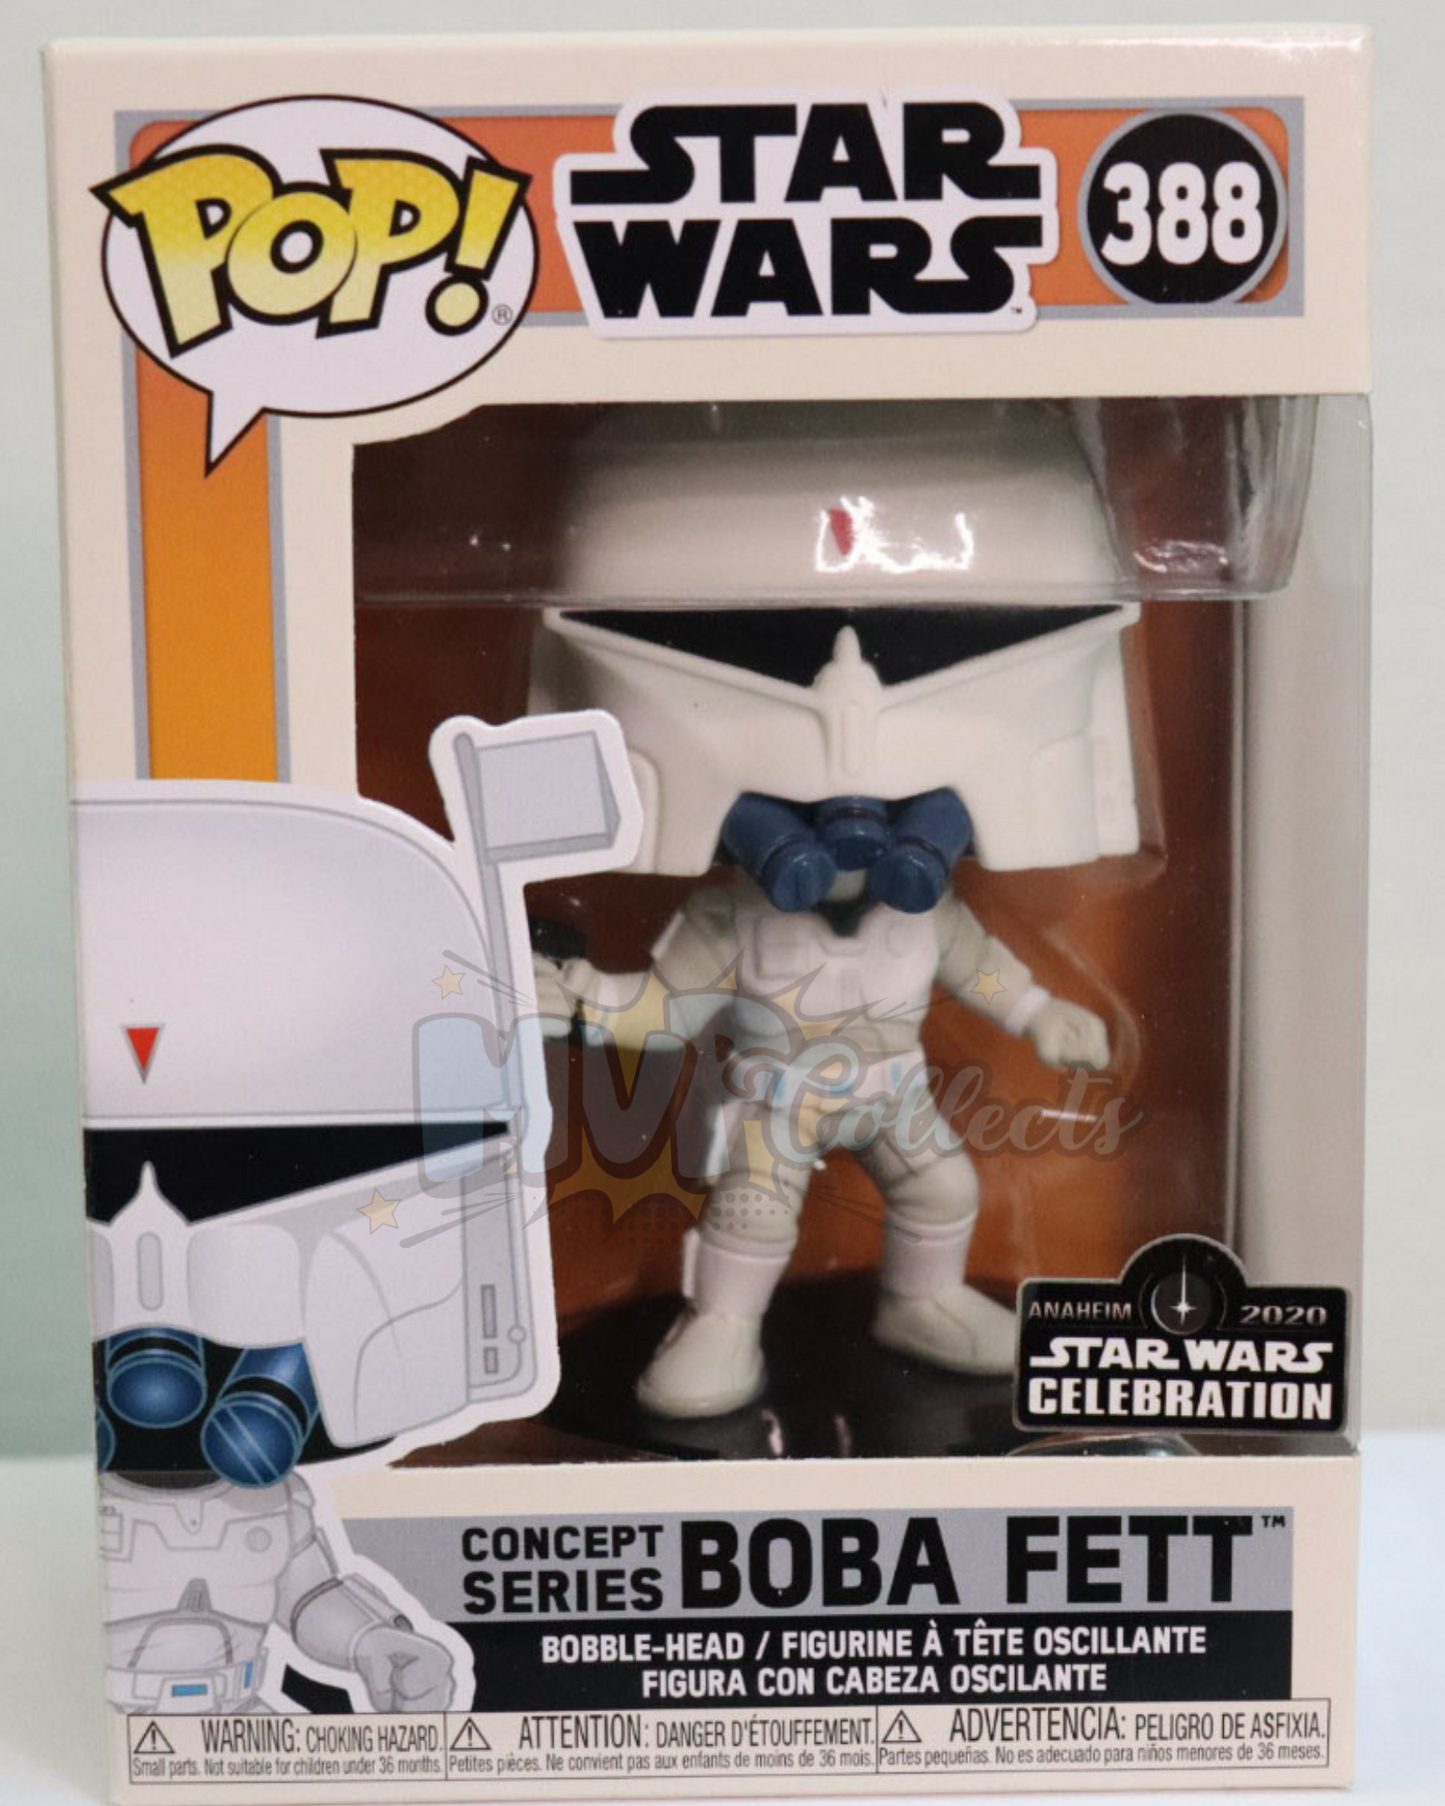 Concept Series Boba Fett Celebration Funko Pop! # 388